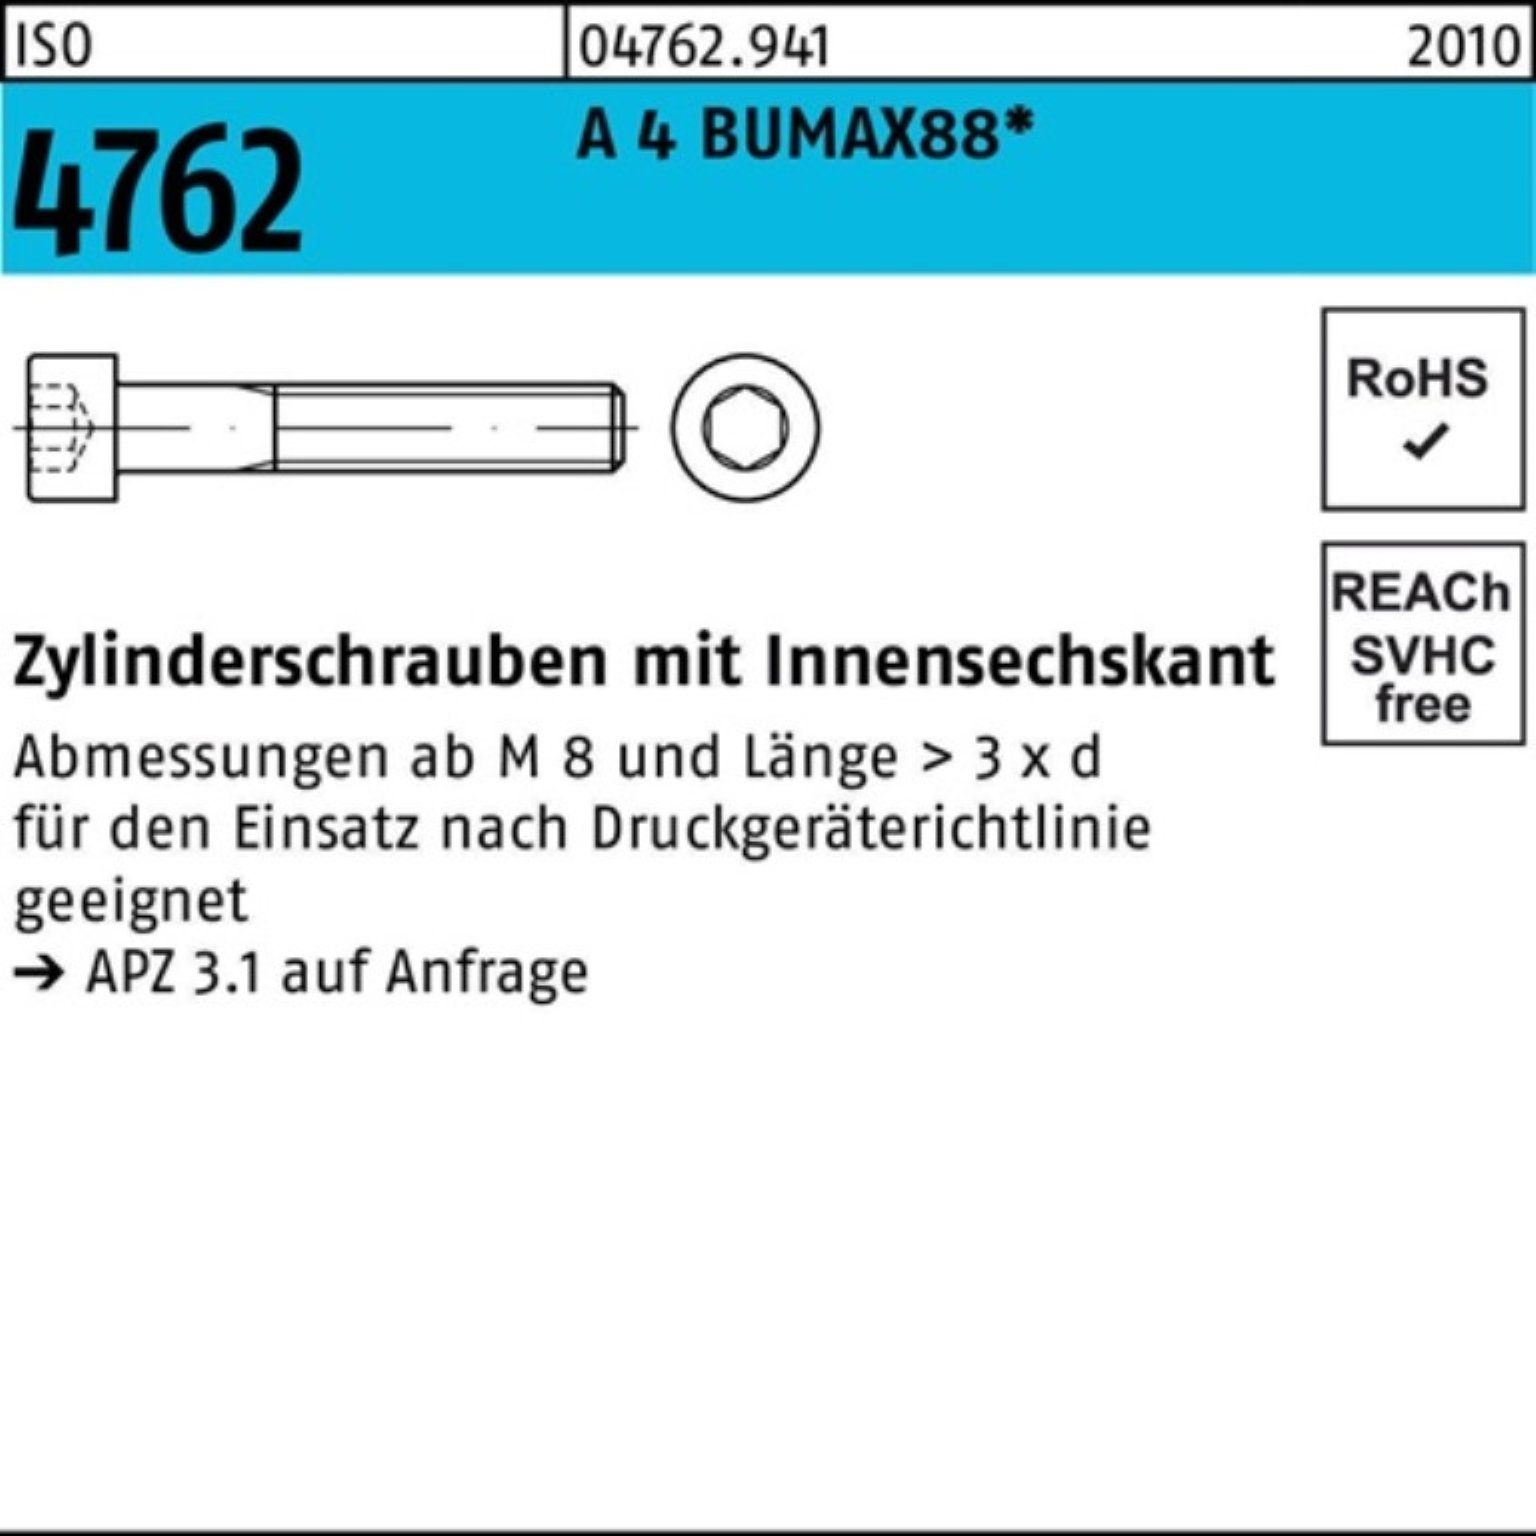 40 Bufab 100 ISO Innen-6kt 4762 100er M6x 4 Pack BUMAX88 A Zylinderschraube Zylinderschraube